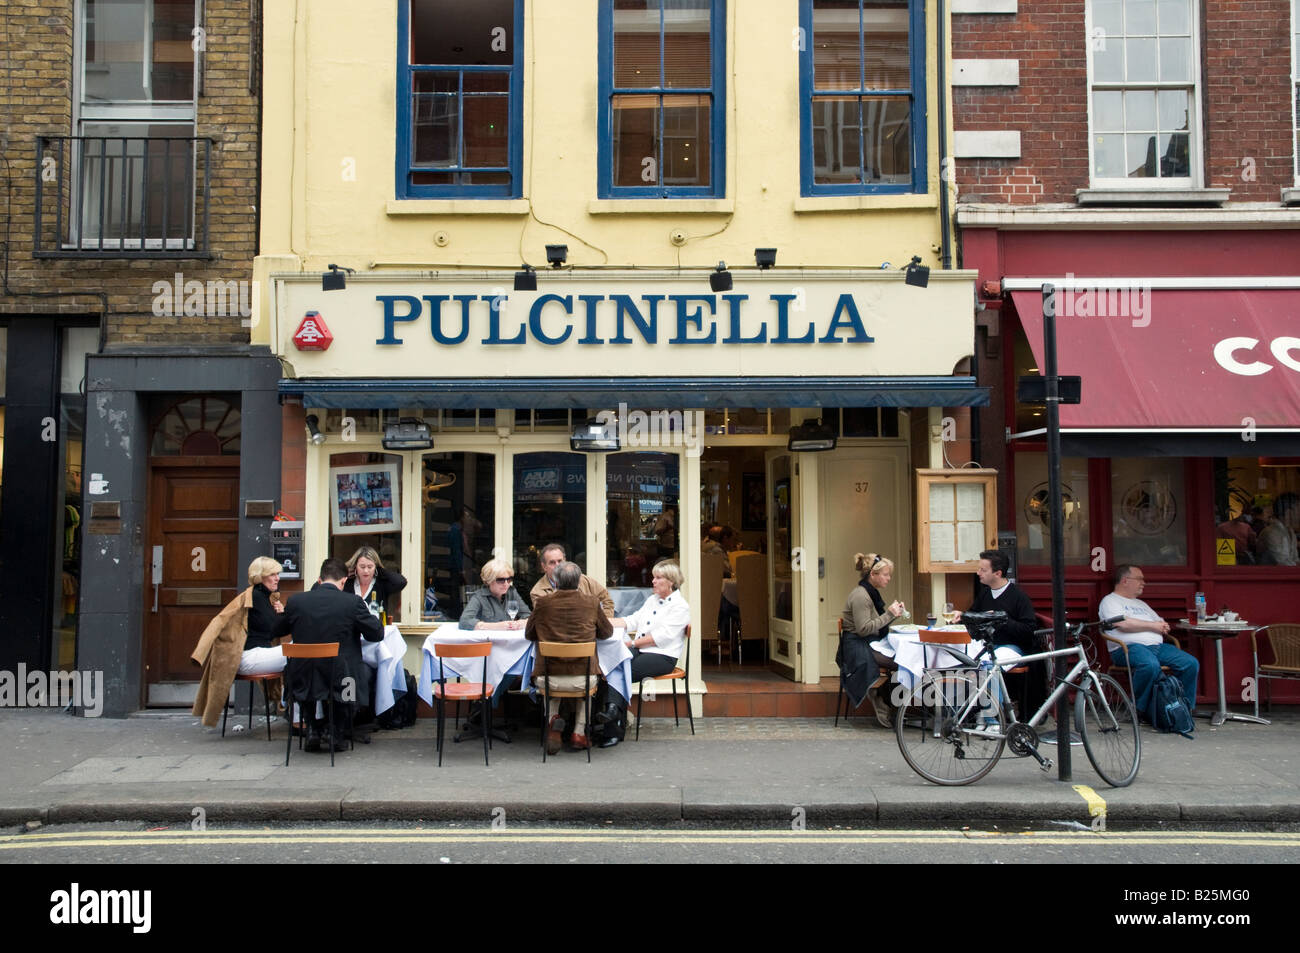 Pulcinella cafe in Old Compton Street, Soho, London, UK Stock Photo